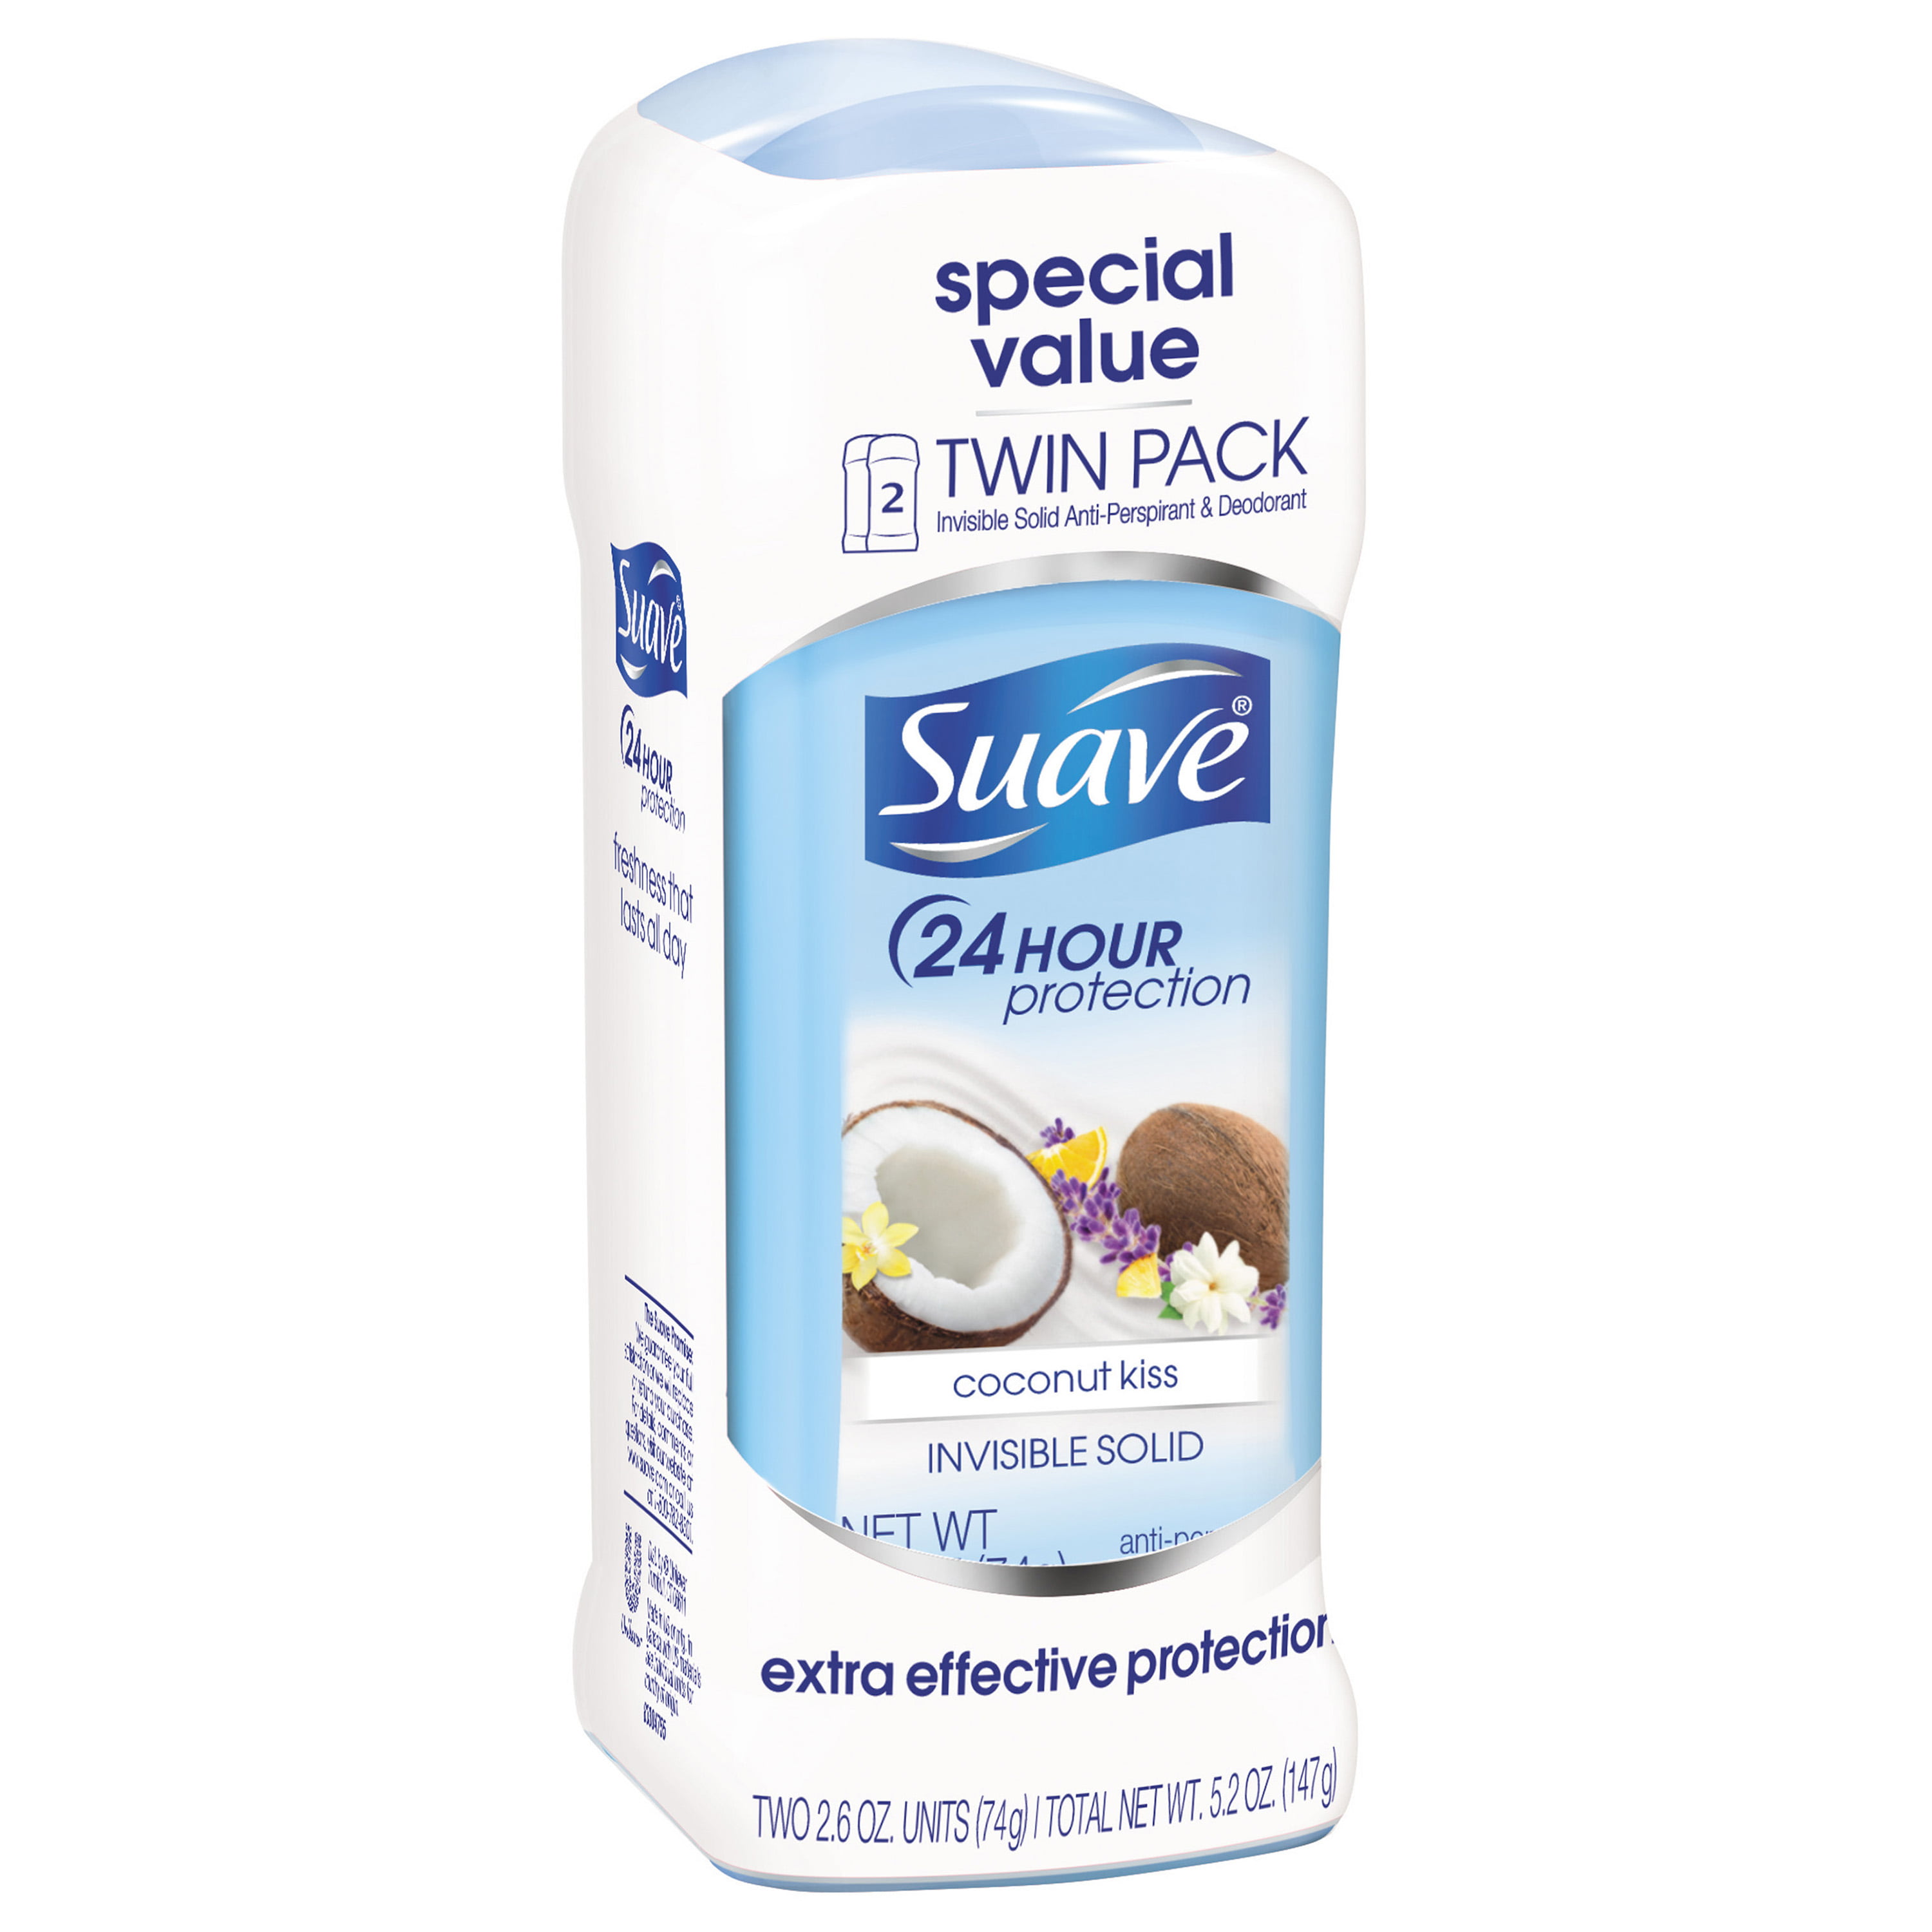 Suave Invisible Solid Antiperspirant Coconut Kiss 1.4 oz 